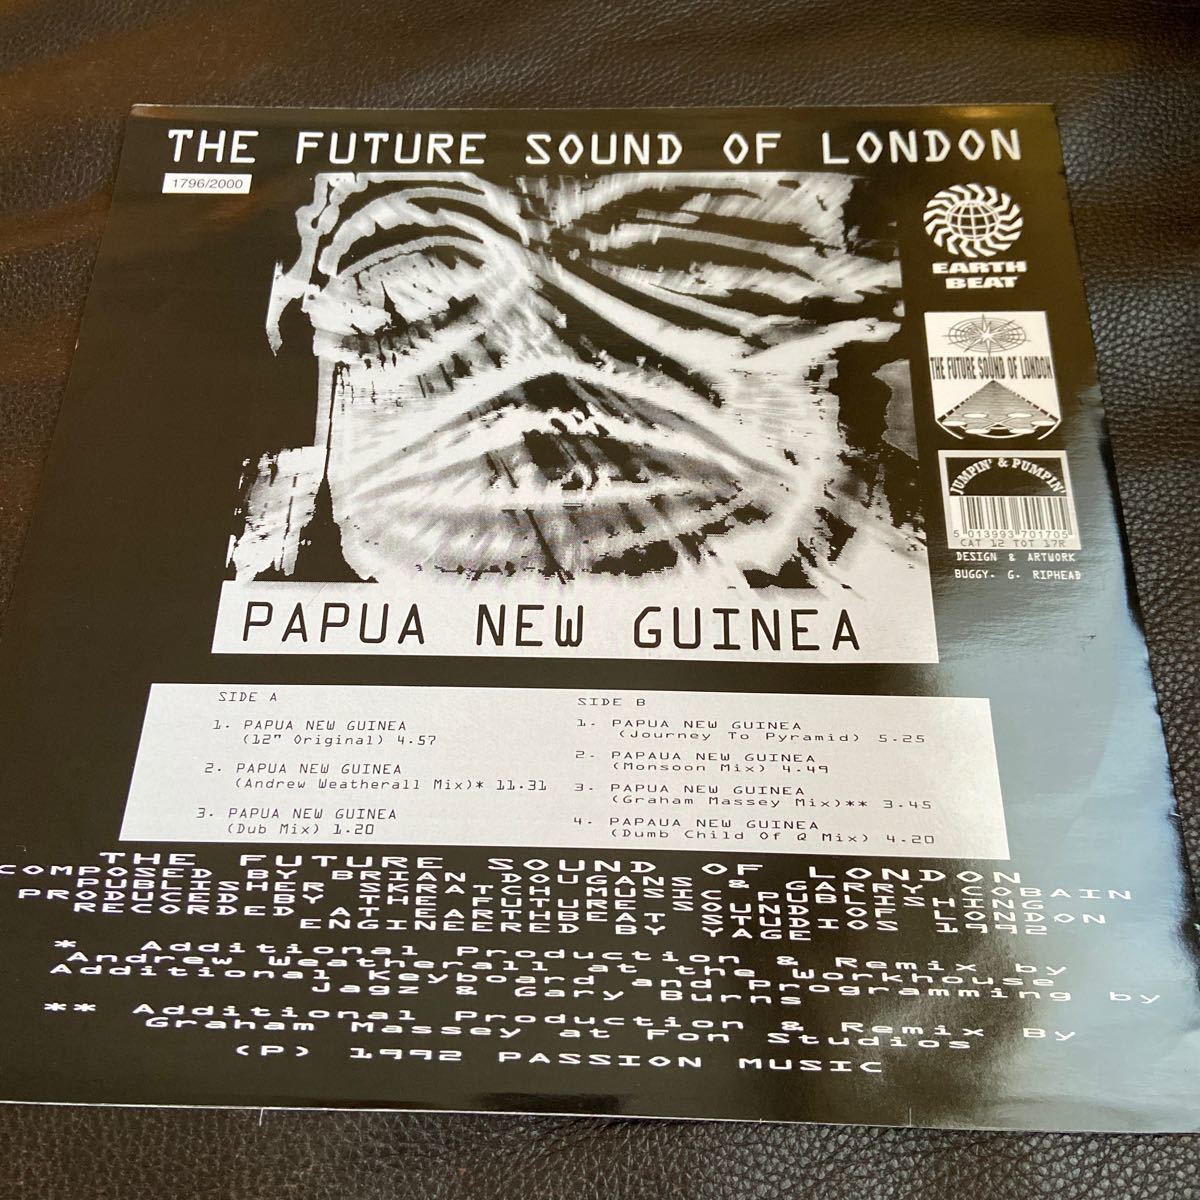 The Future Sound Of London /Papua New Guinea/Andrew Weatherall Mix/Graham Massey MIX/original mix/dub mix/DYL /fjordセットの画像2